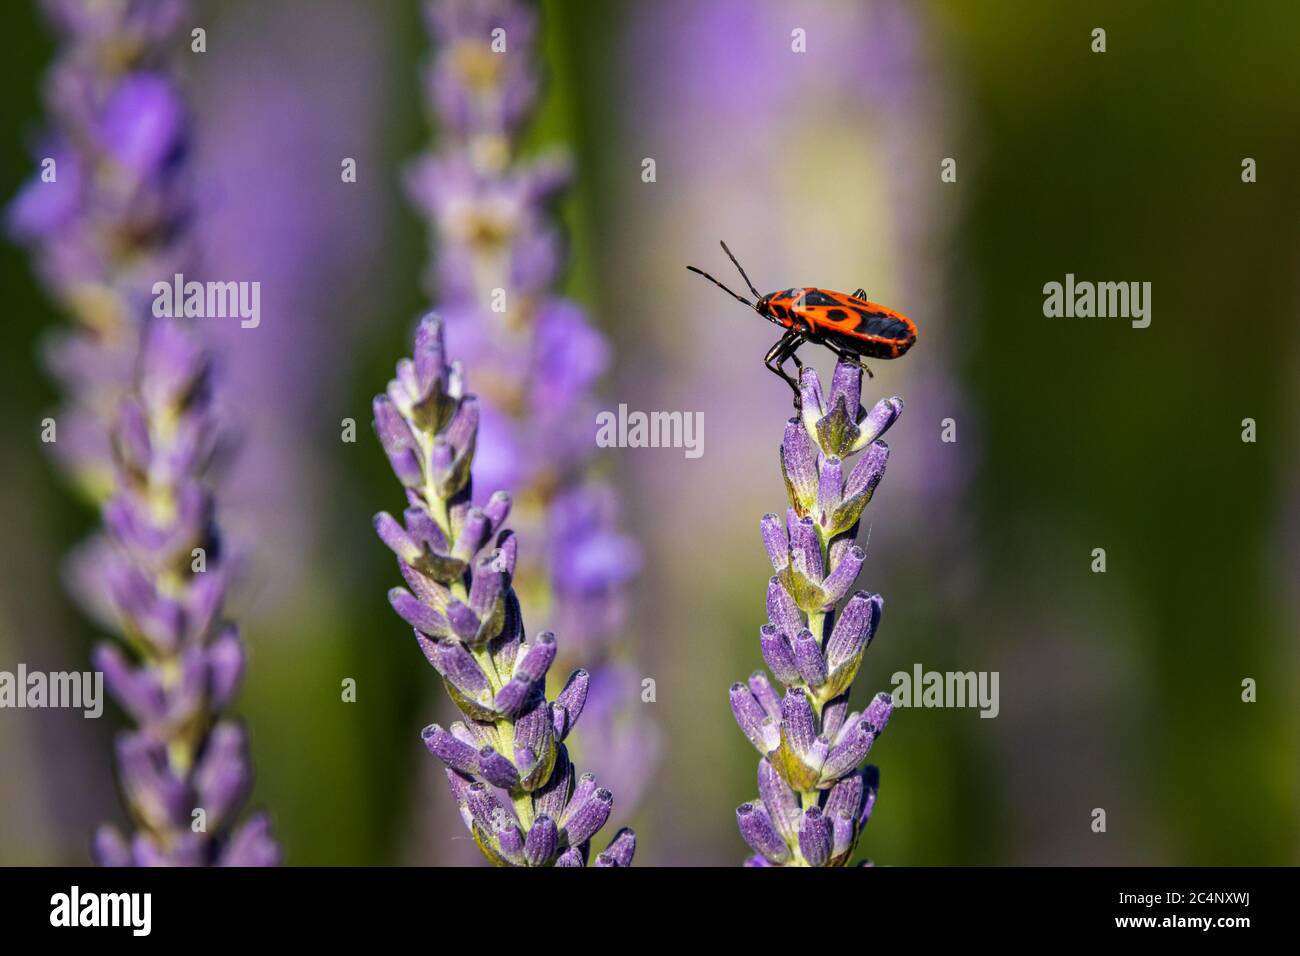 Firebug (Pyrrhocoris apterus) on Lavender (Lavandula) in the garden Stock Photo